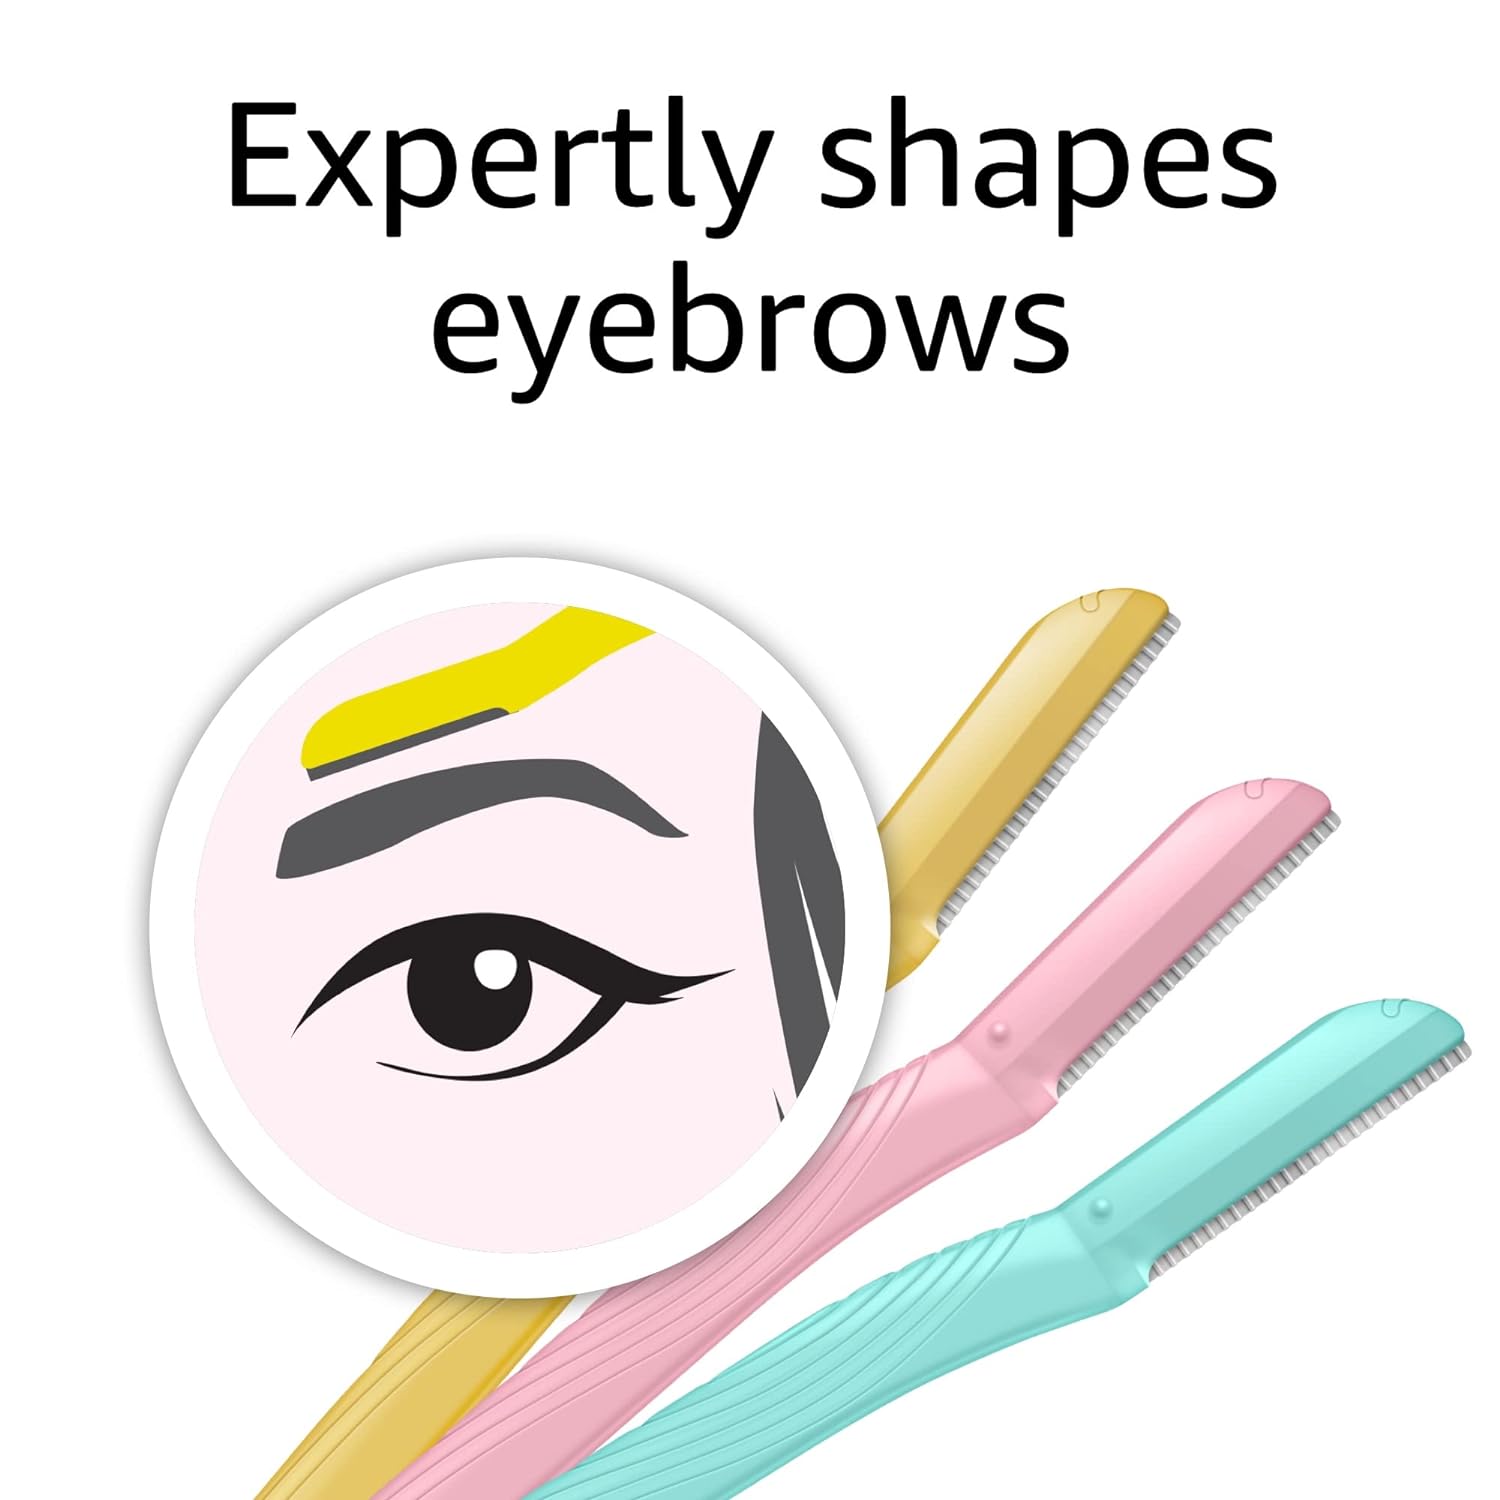 Amazon Basics Womens Multipurpose Exfoliating Dermaplaning Tool, Eyebrow Razor, and Facial Razor, Includes Blade Cover, Multicolor, 3 Count